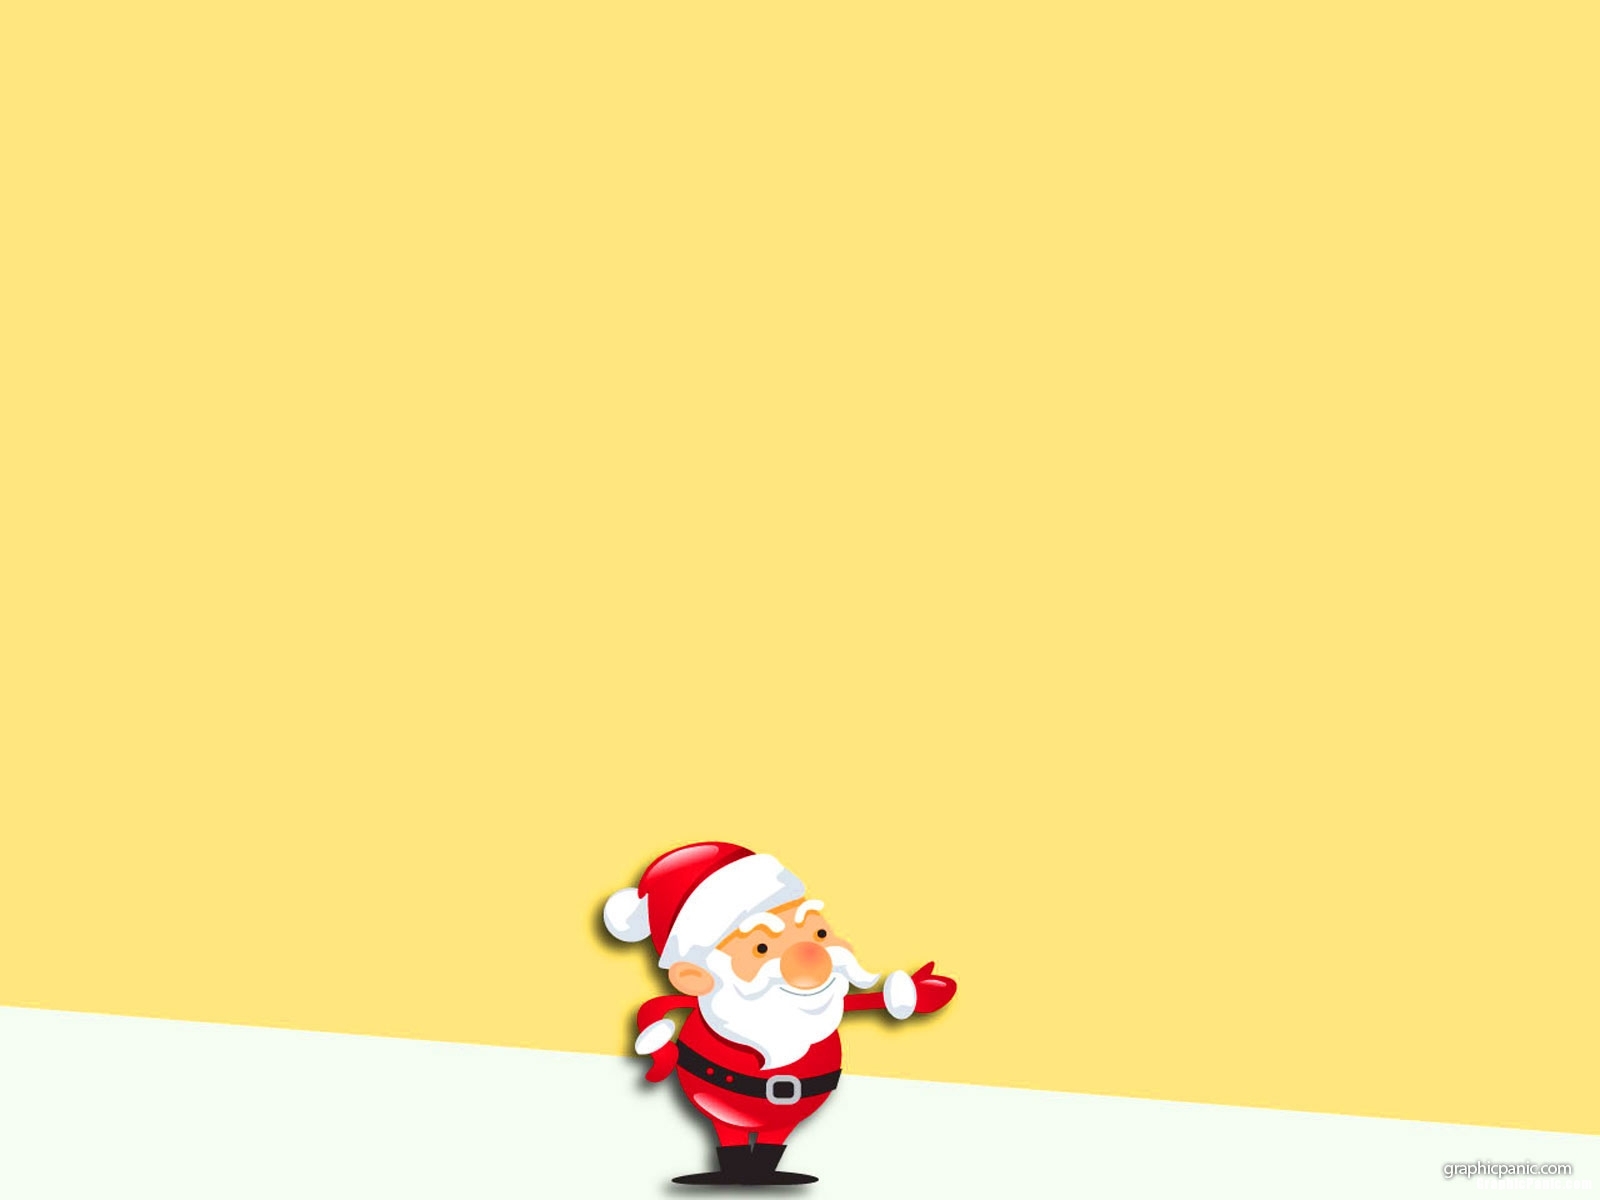 Santa Claus Background